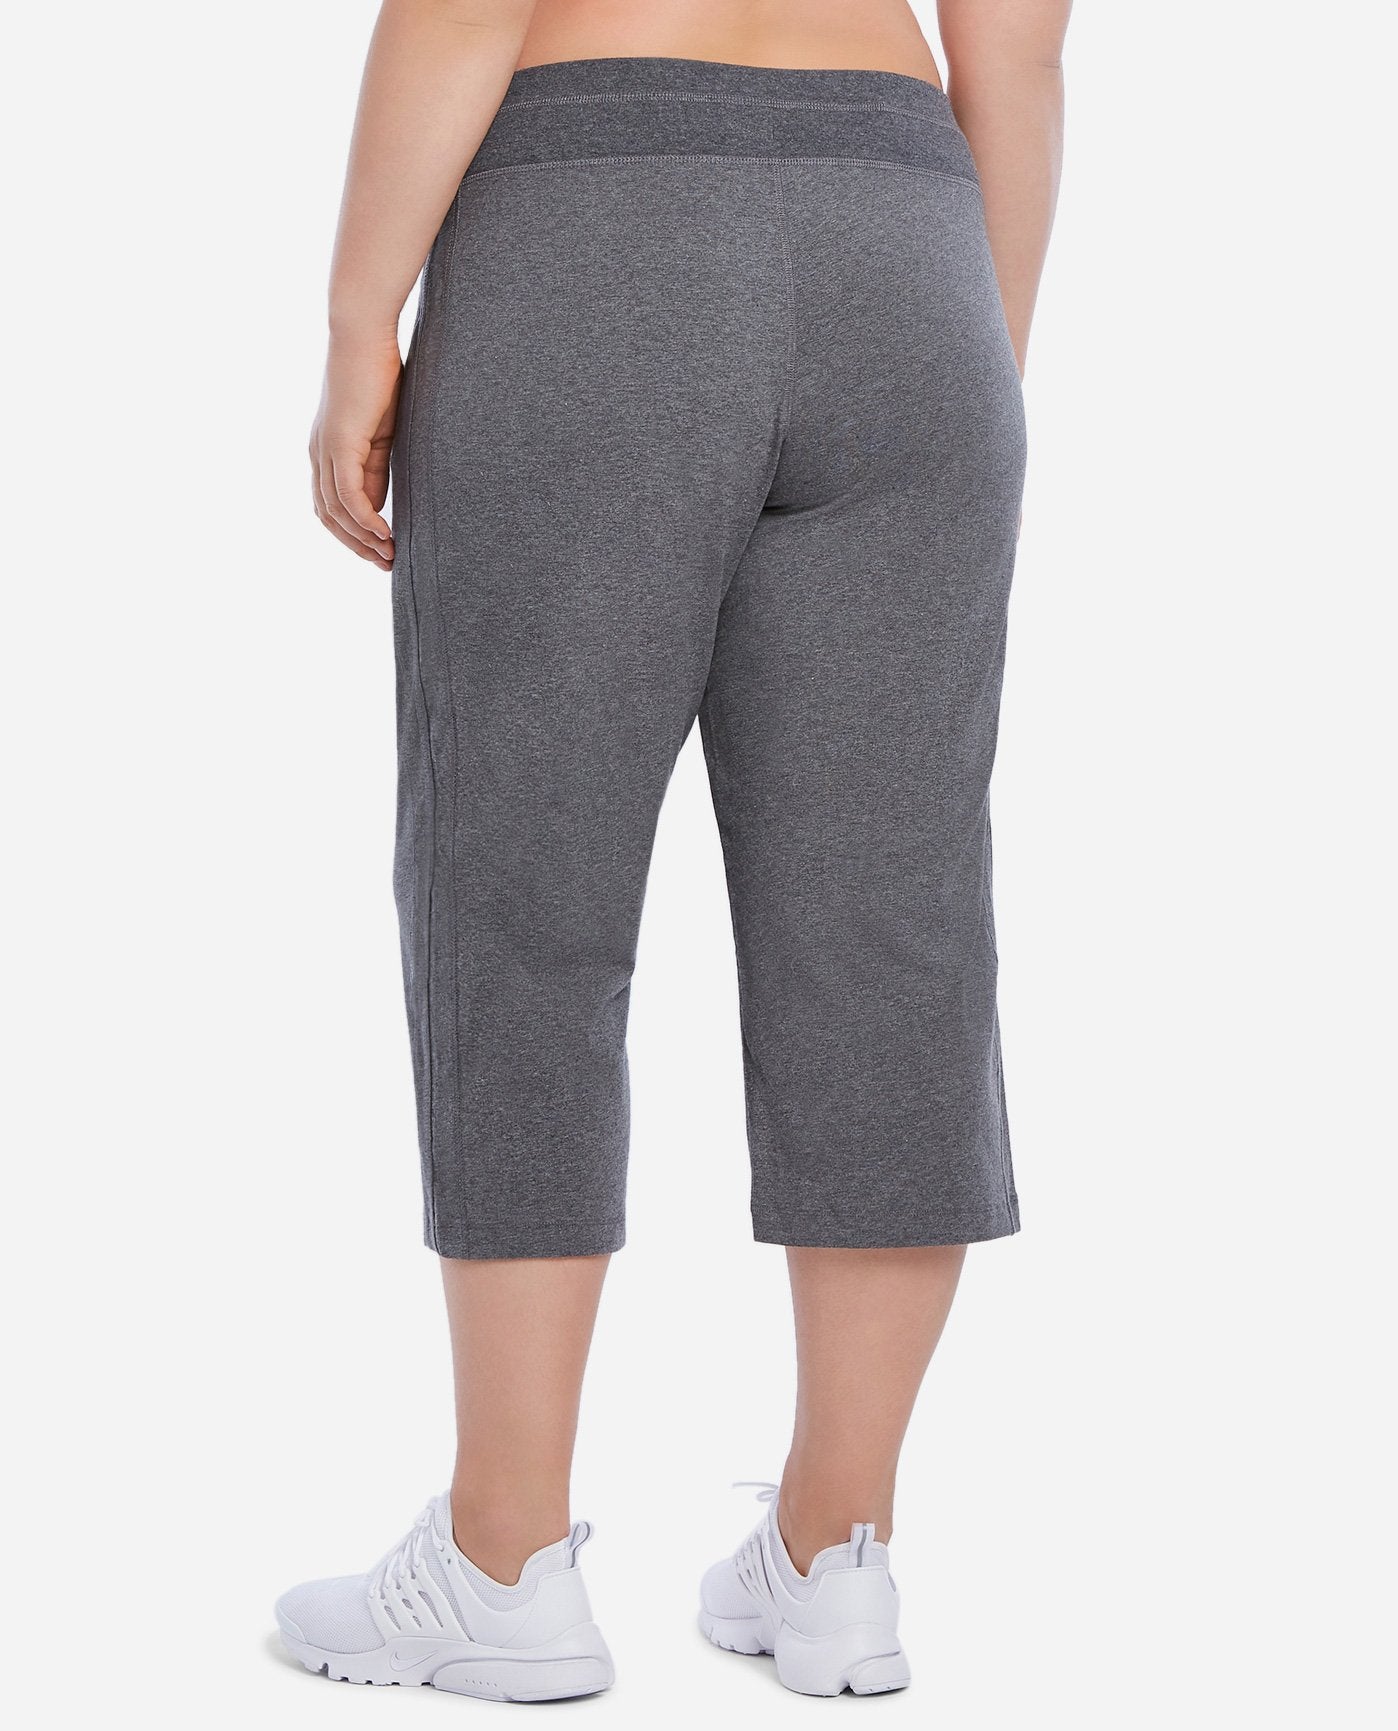 Danskin Now Women's Active Wear Micro Fleece Pants Size Small Gray on eBid  United States